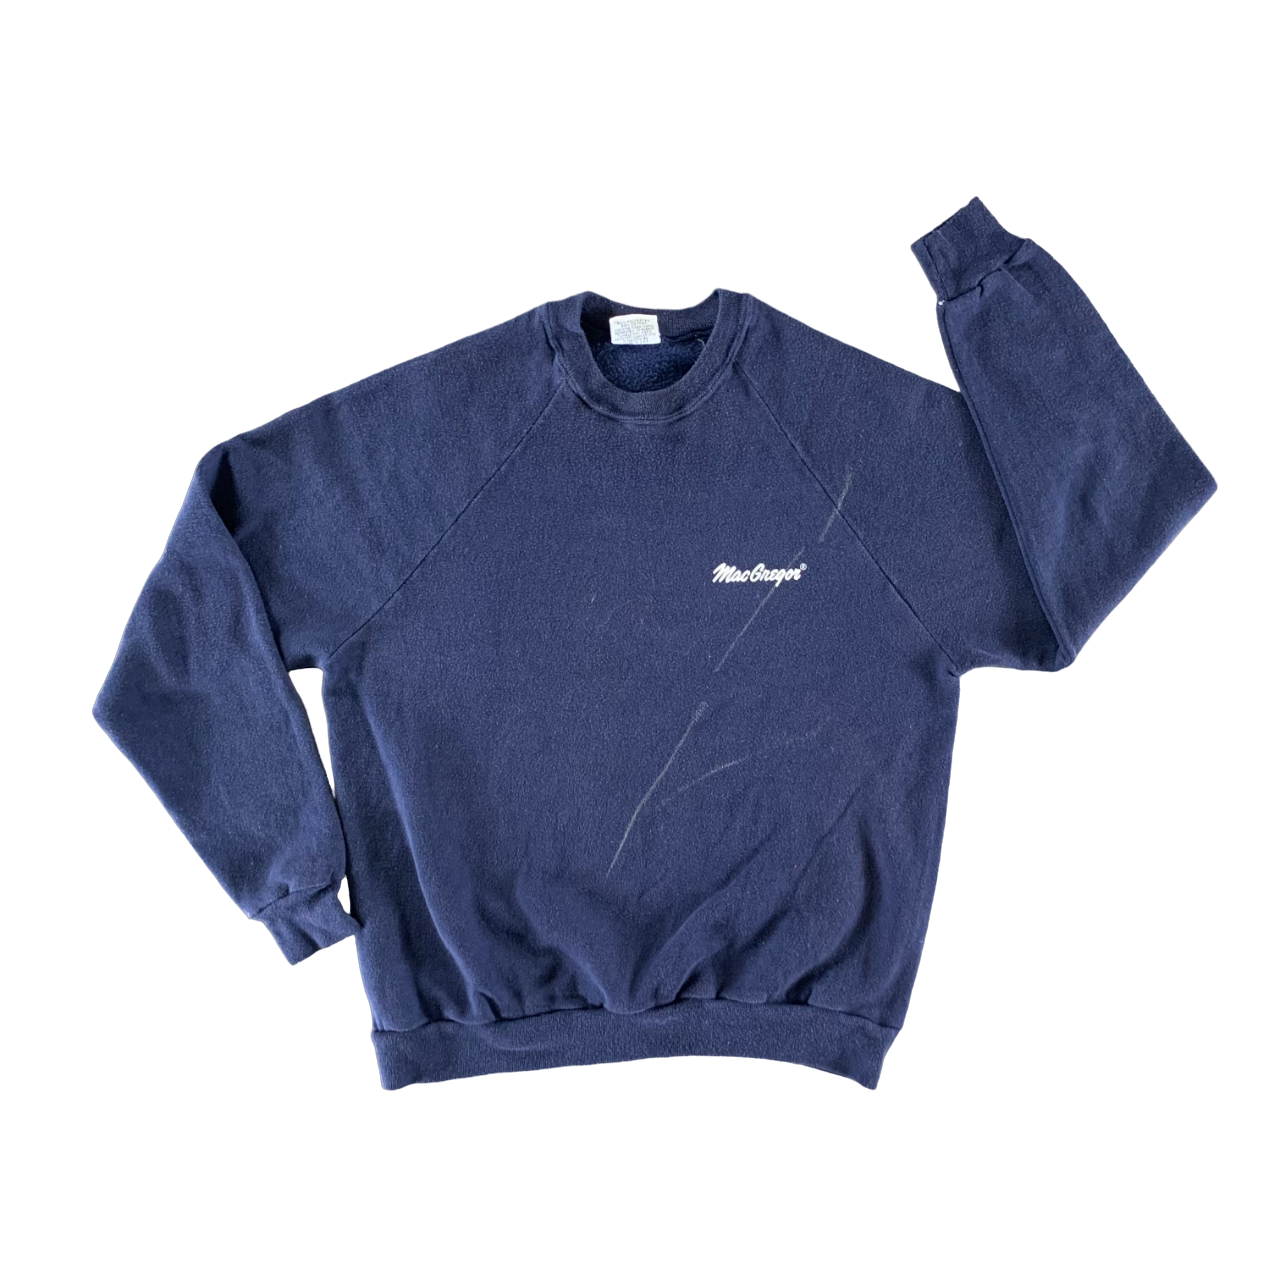 Vintage 1980s MacGregor Sweatshirt size XL